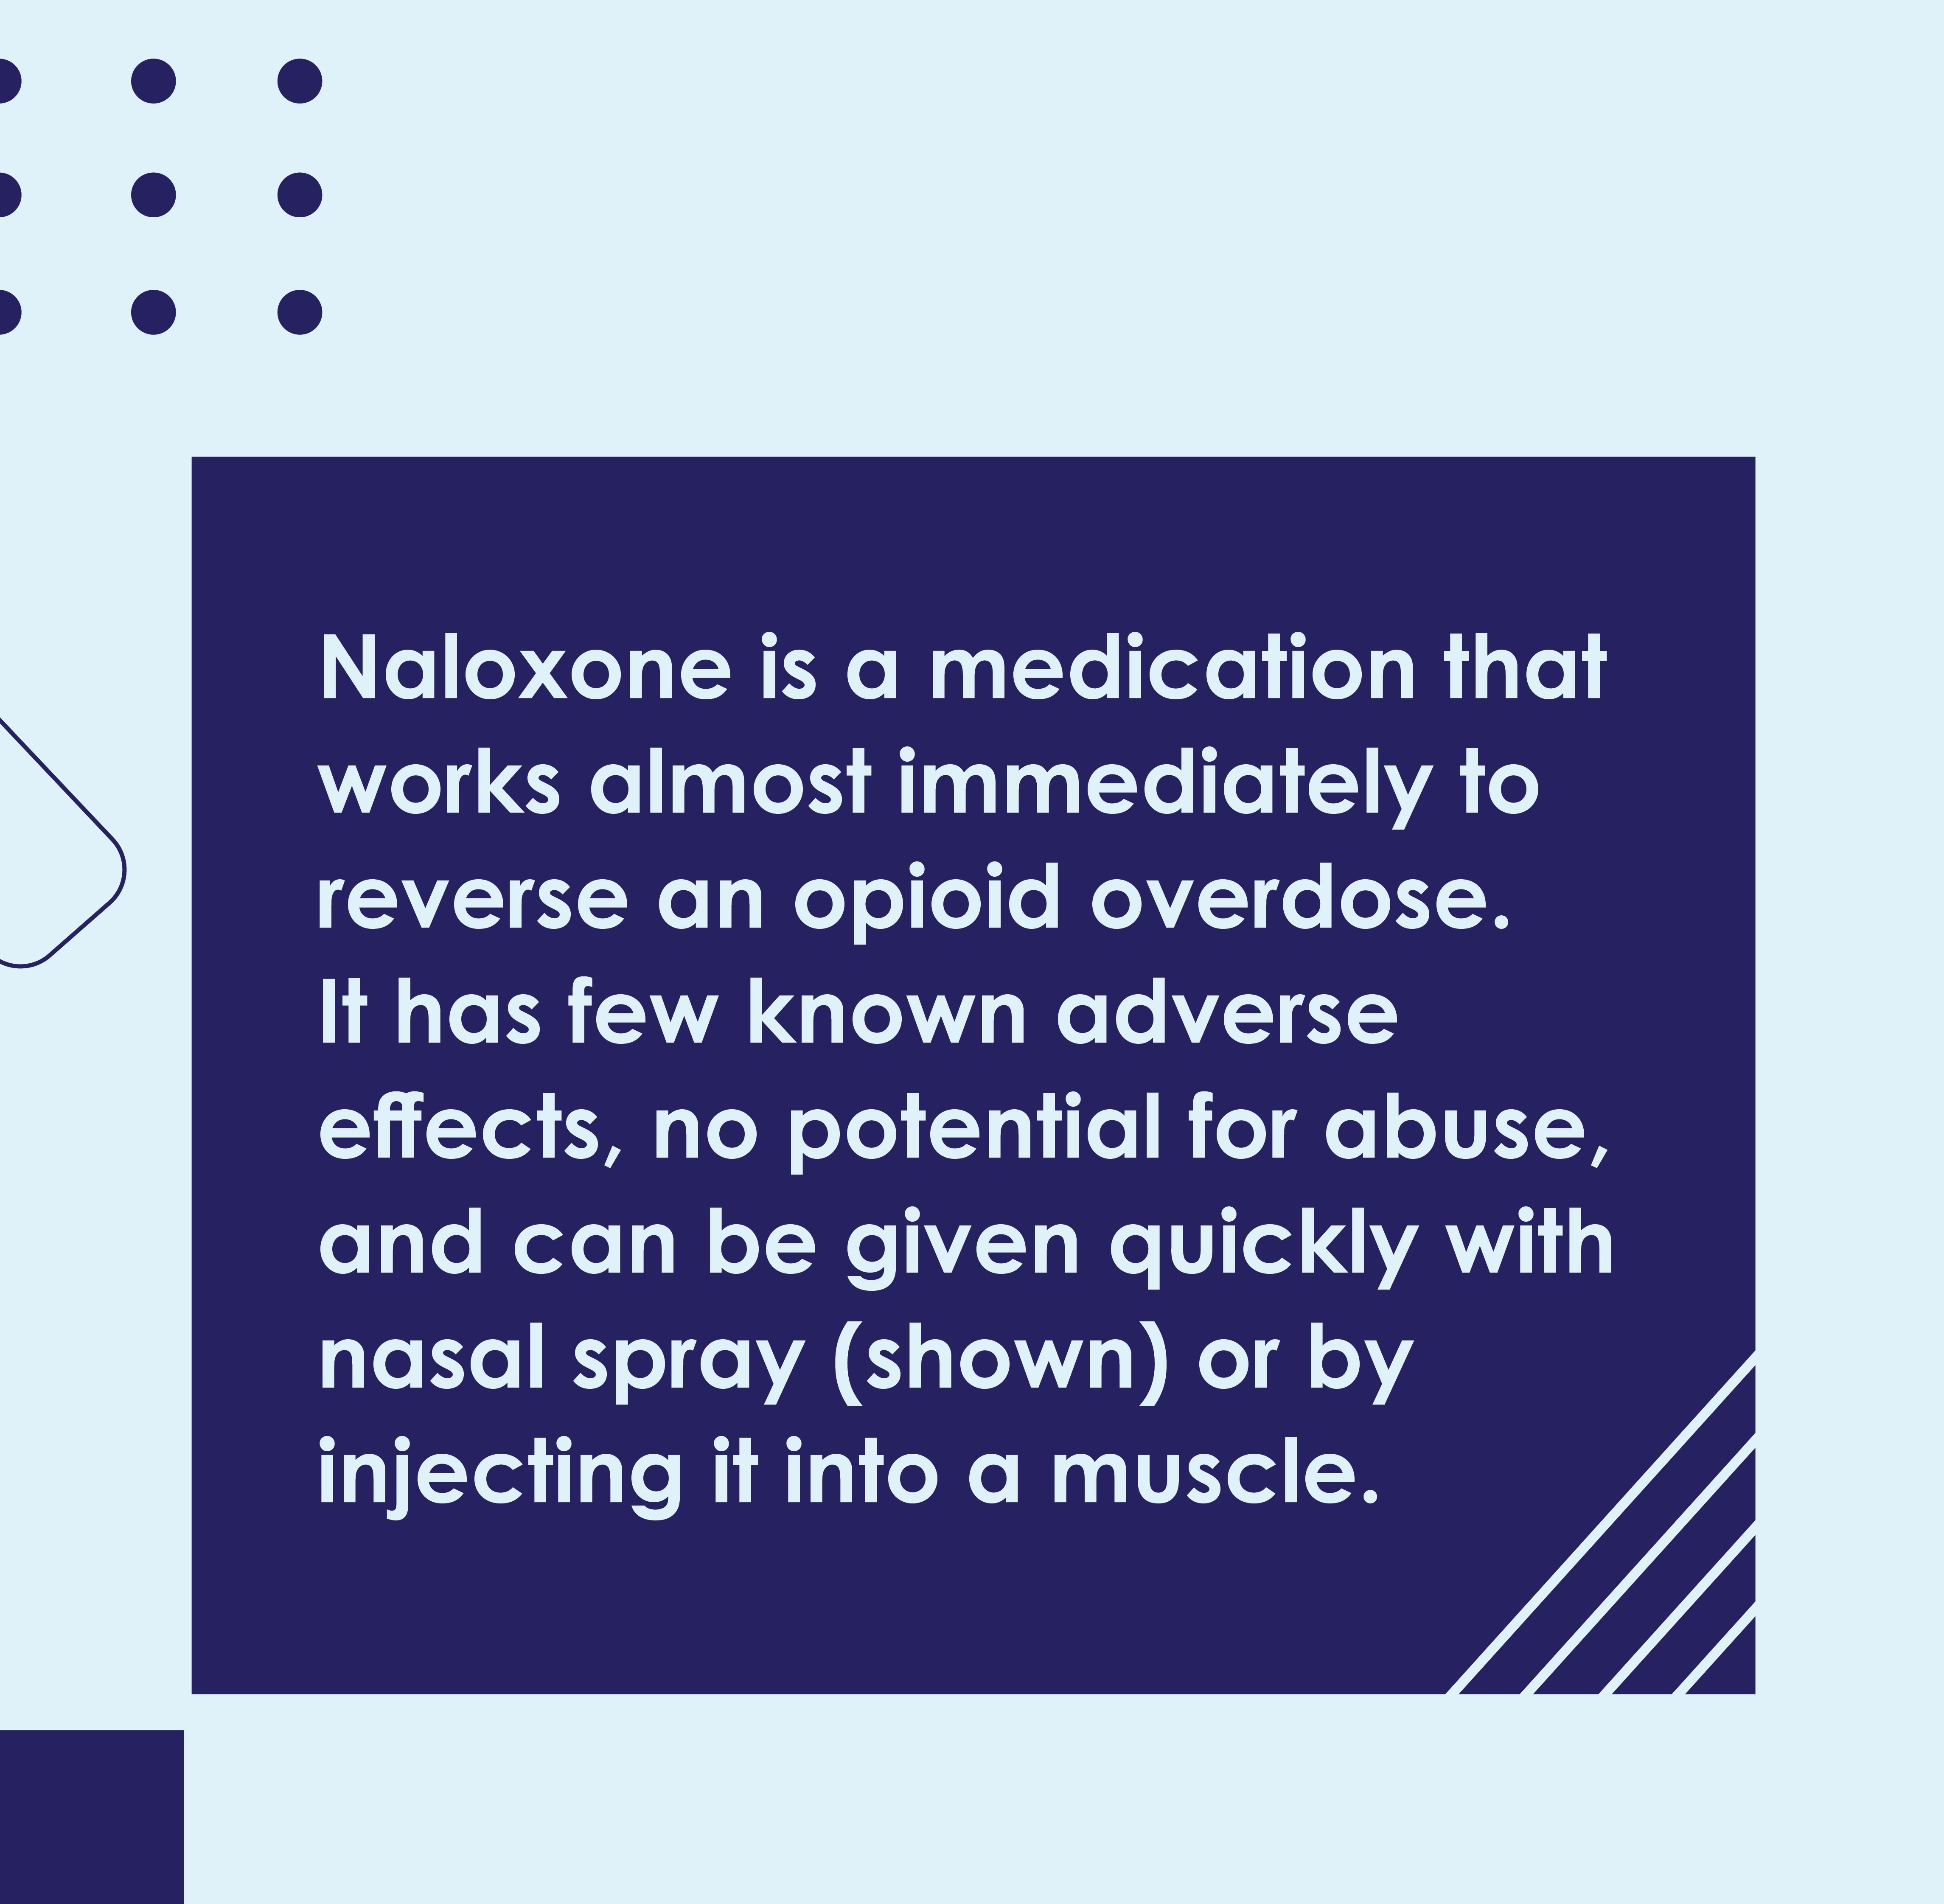 Naloxone is a medication